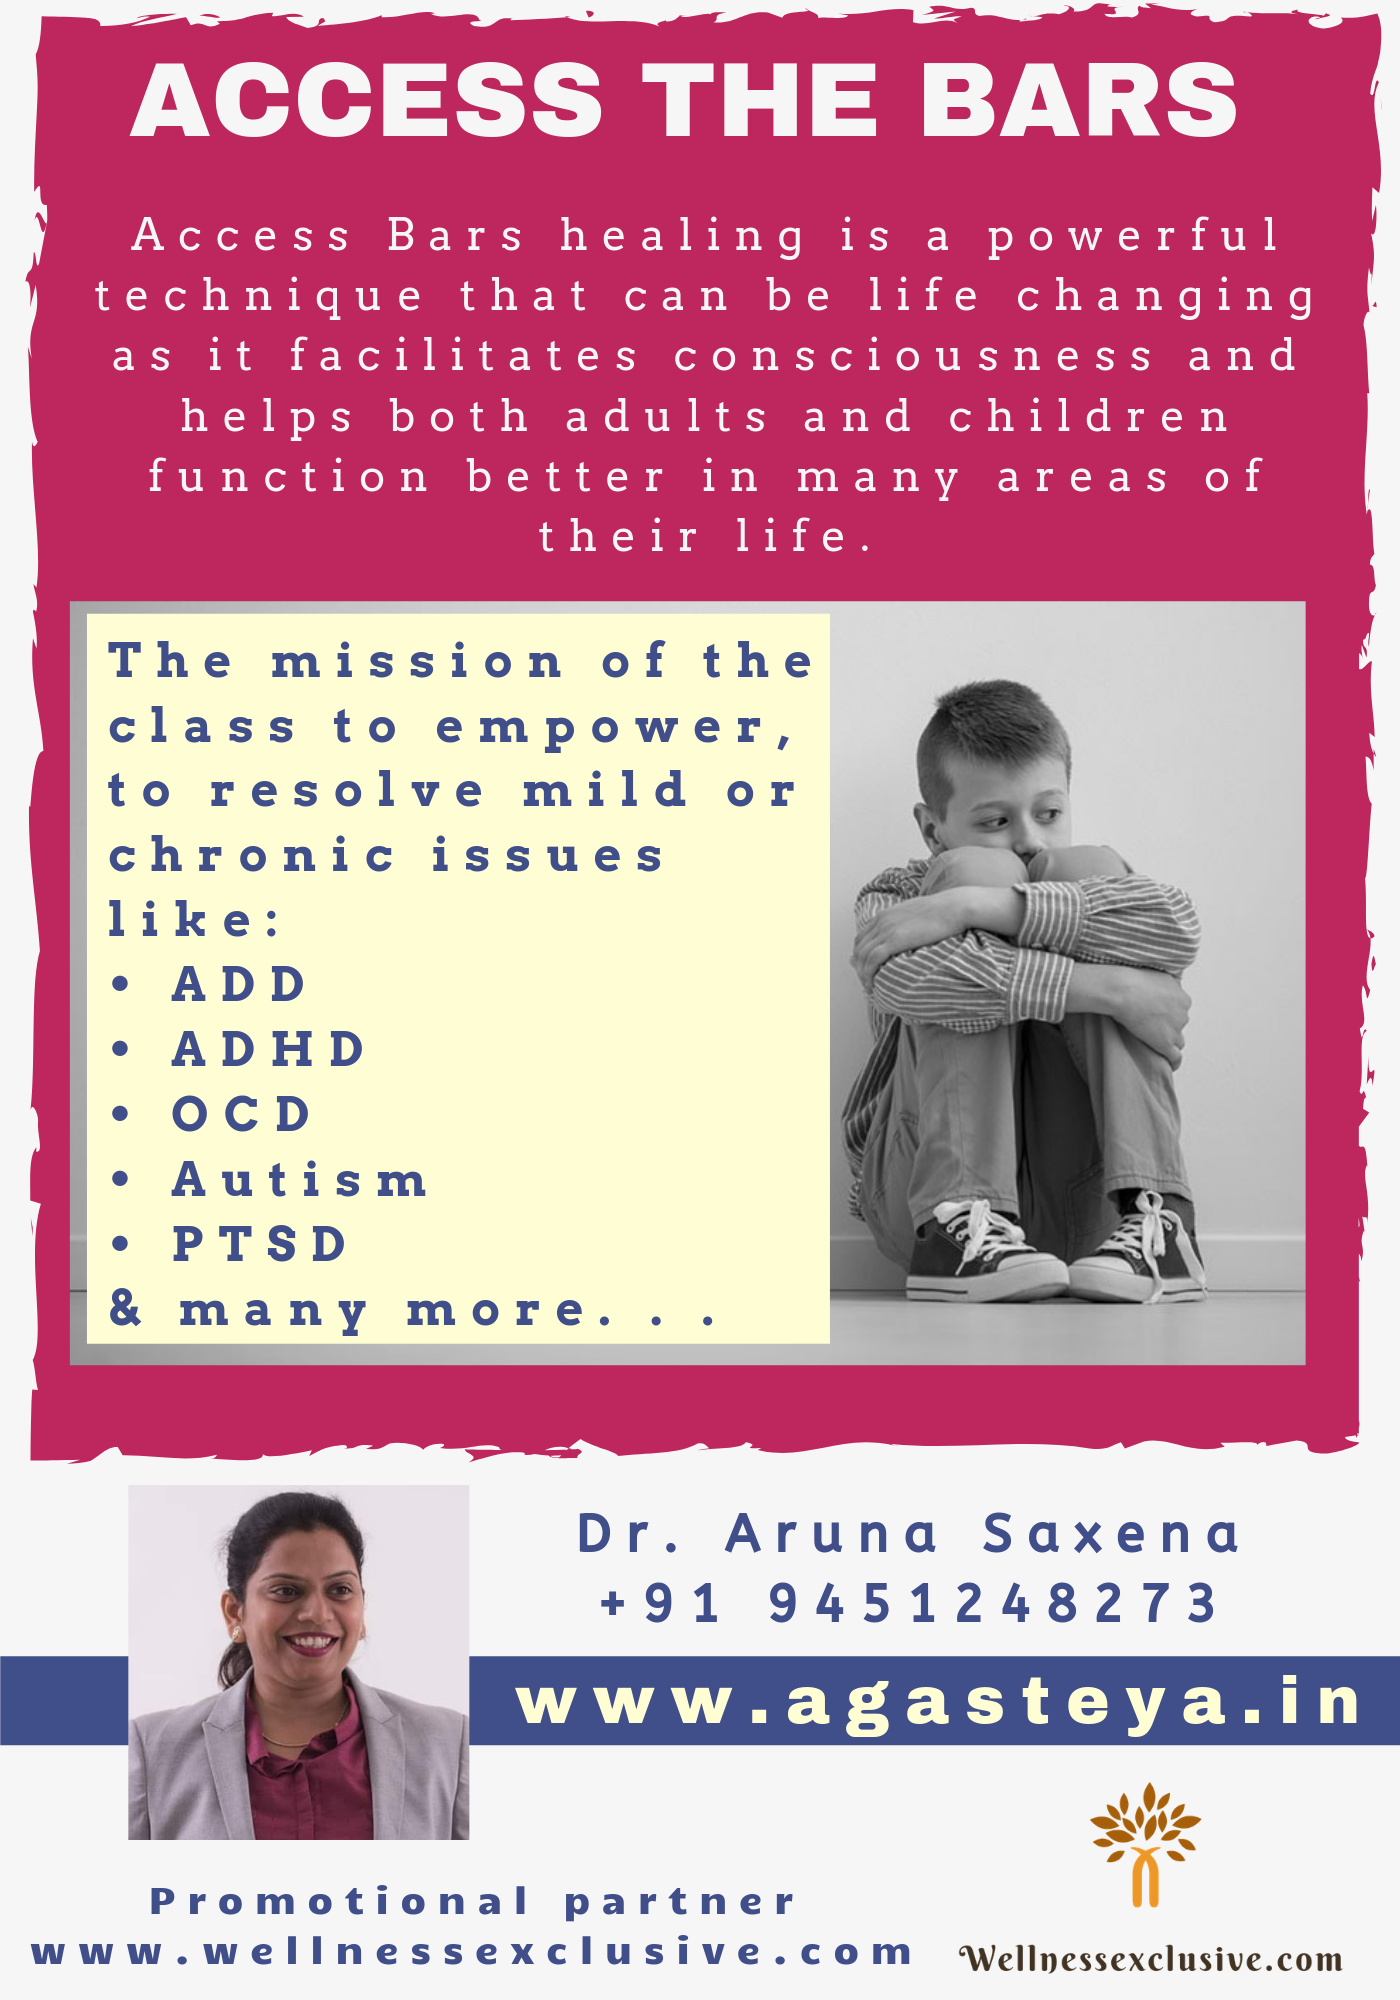 Access Bars Class for ADHD, ADD, OCD, Autism, PCD by Dr. Aruna Saxena - Thiruvananthapuram